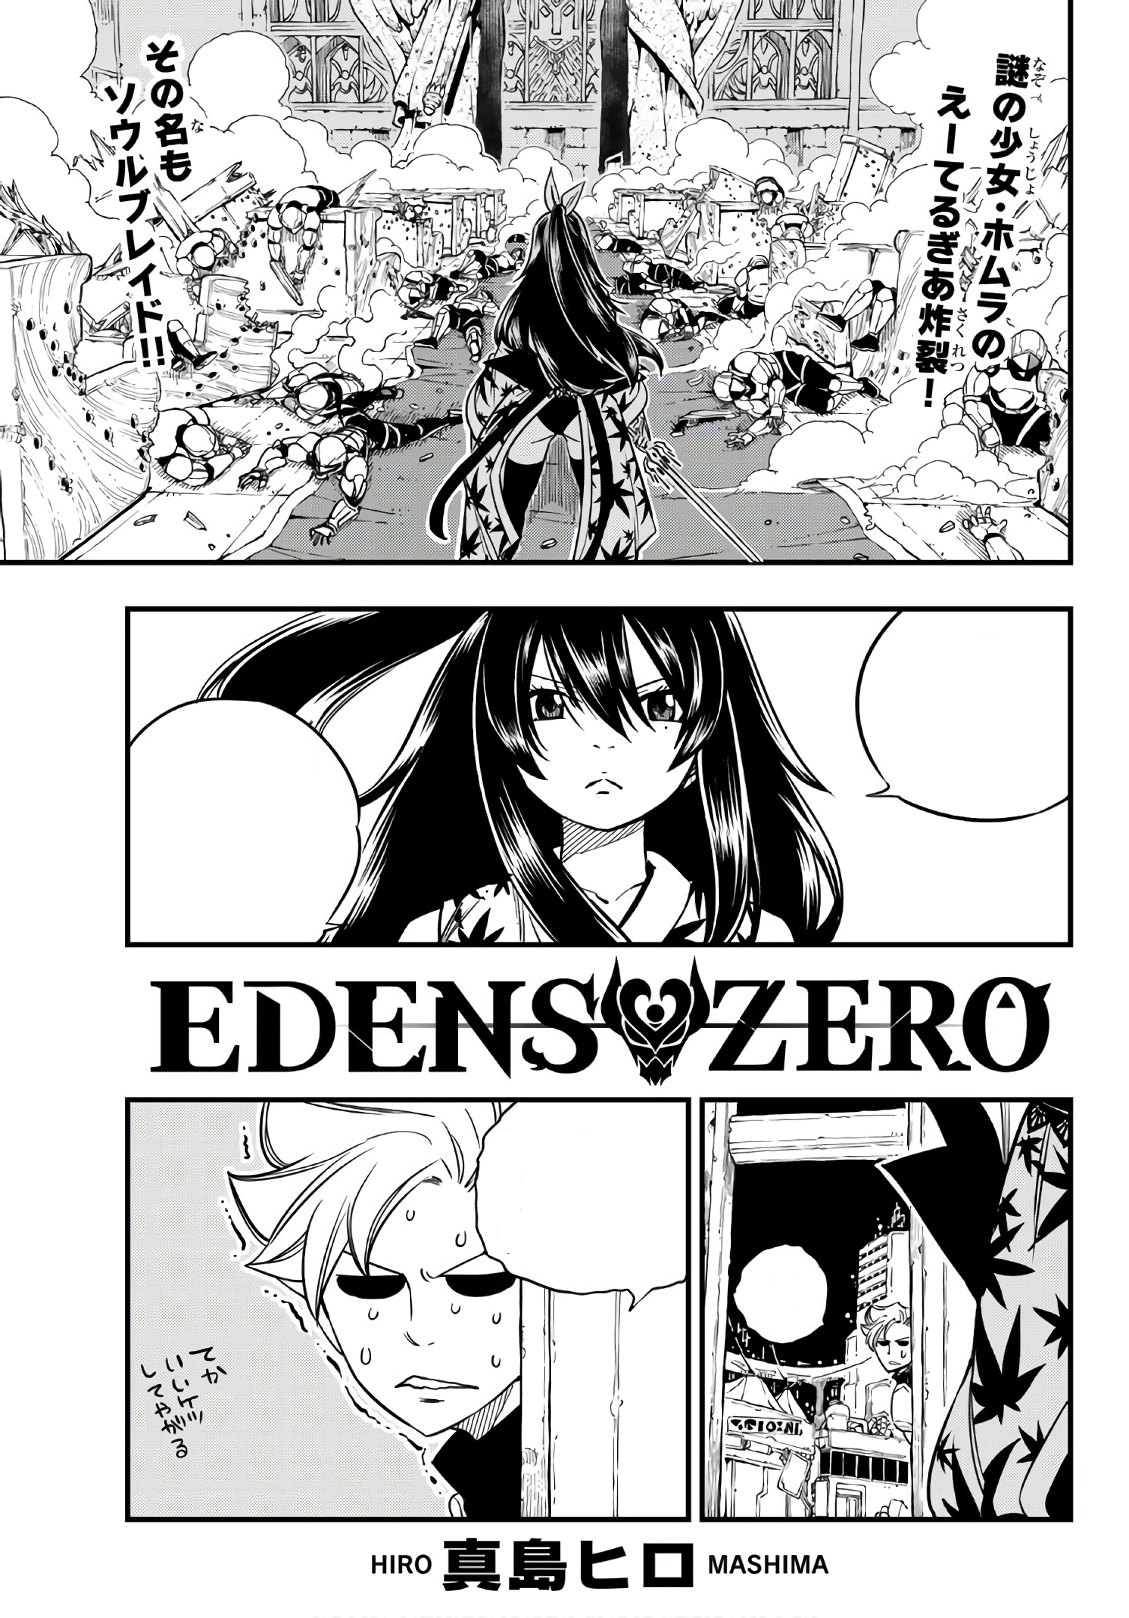 Edens Zero - Episode 22 discussion : r/anime